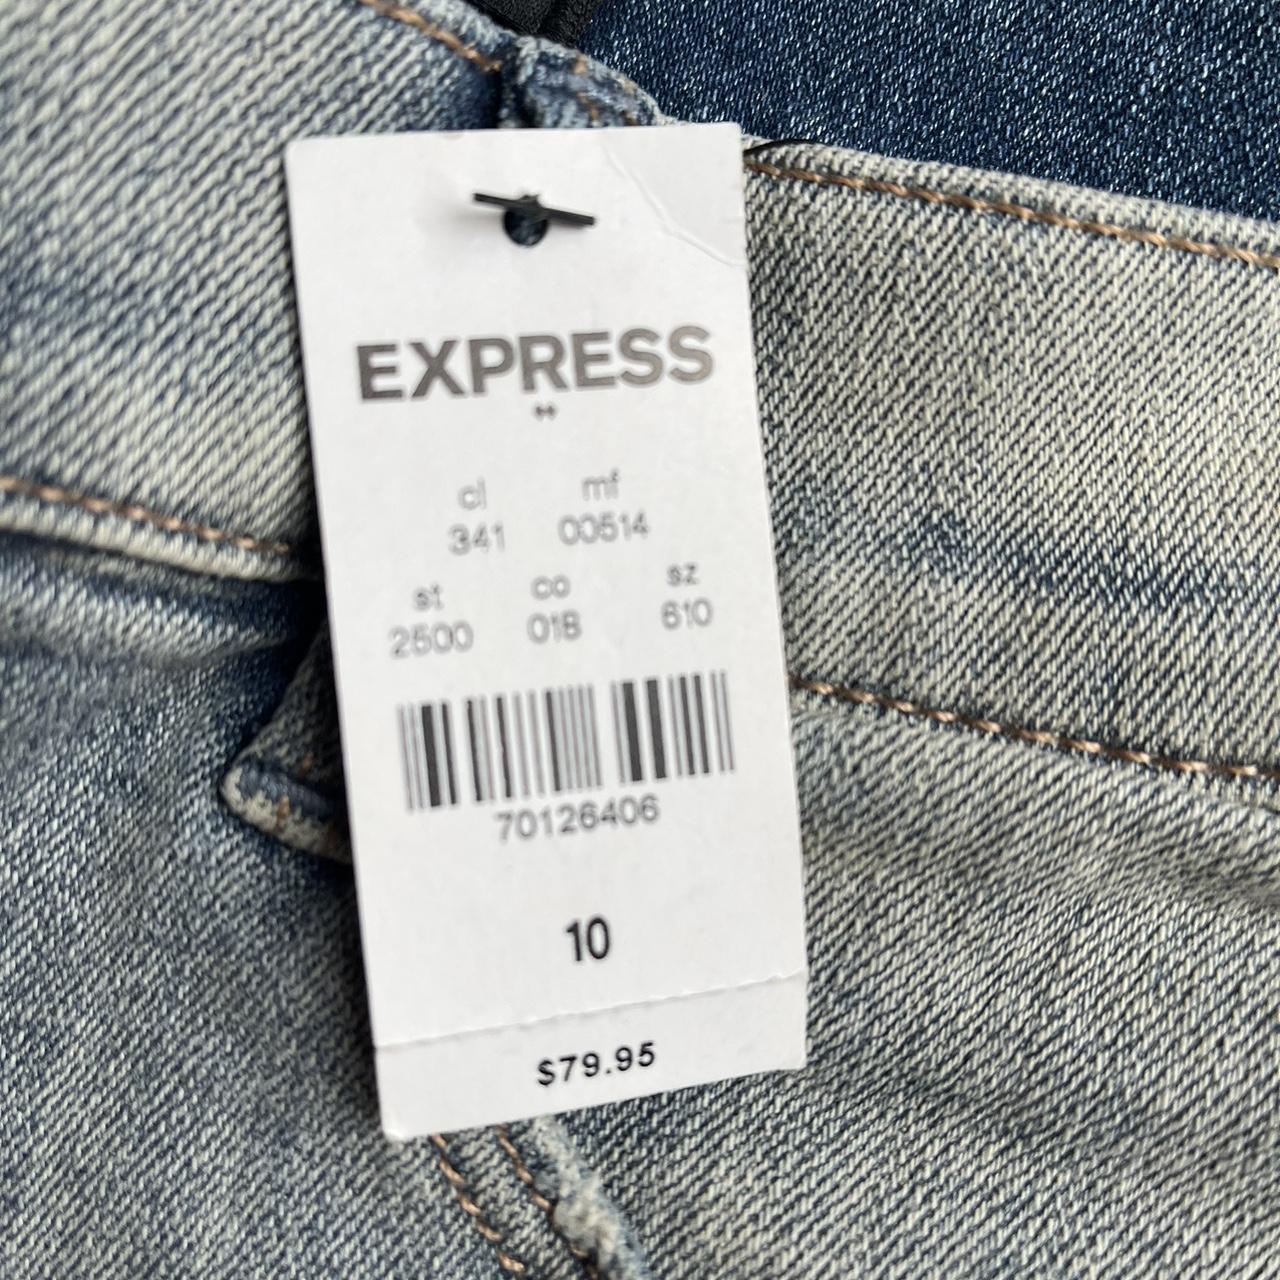 Express jeans, women's size 10, brand new - Depop